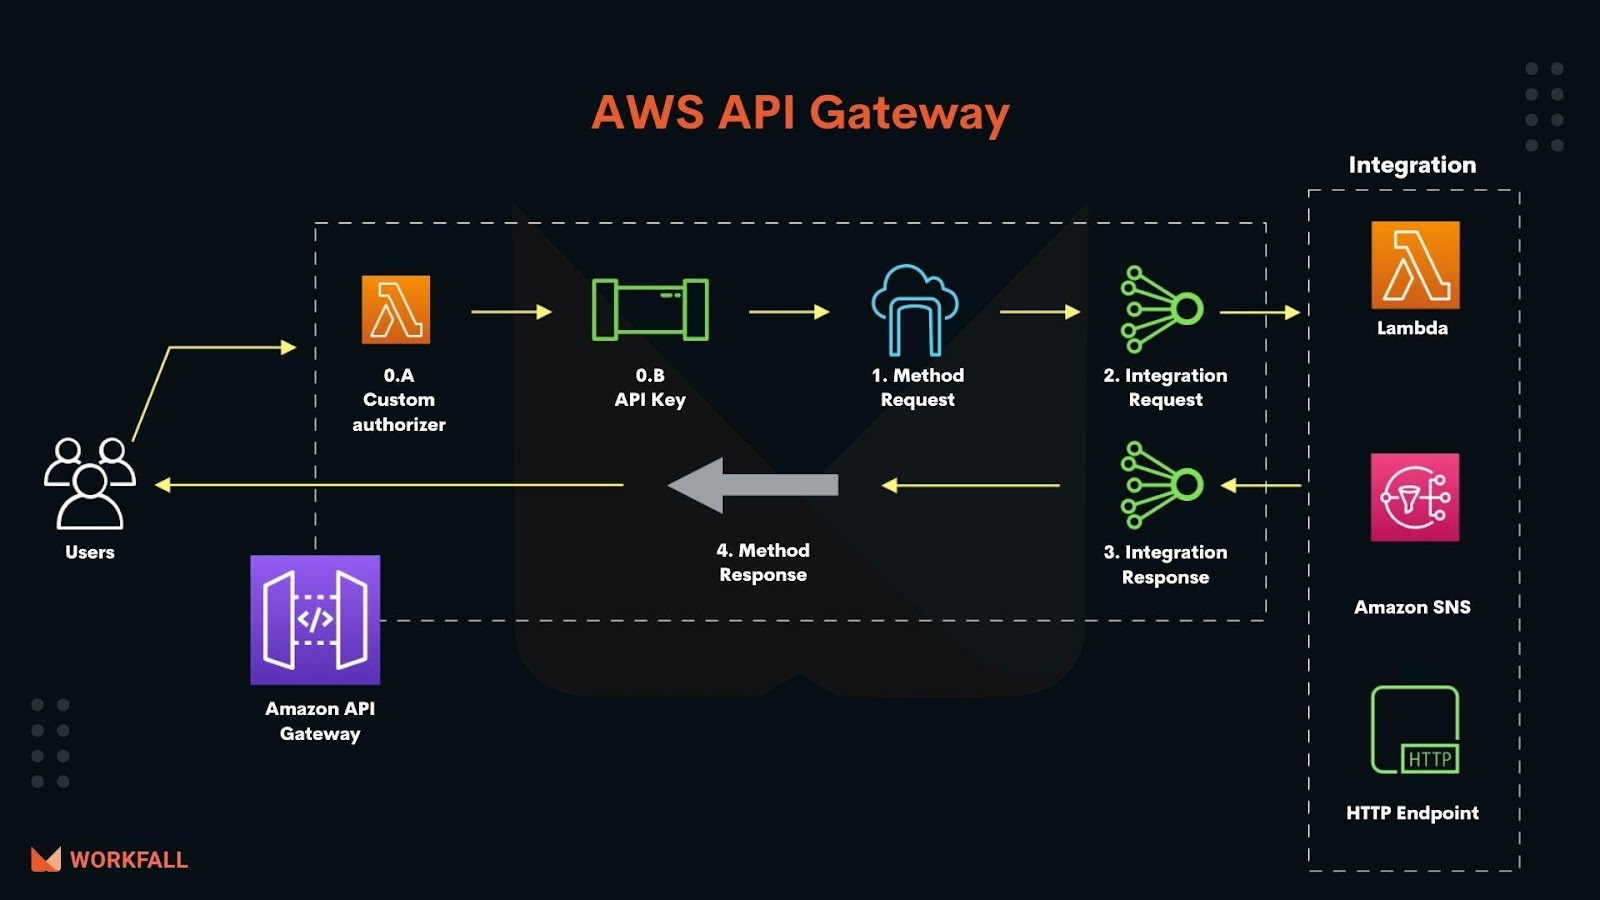 What is the Amazon API Gateway?